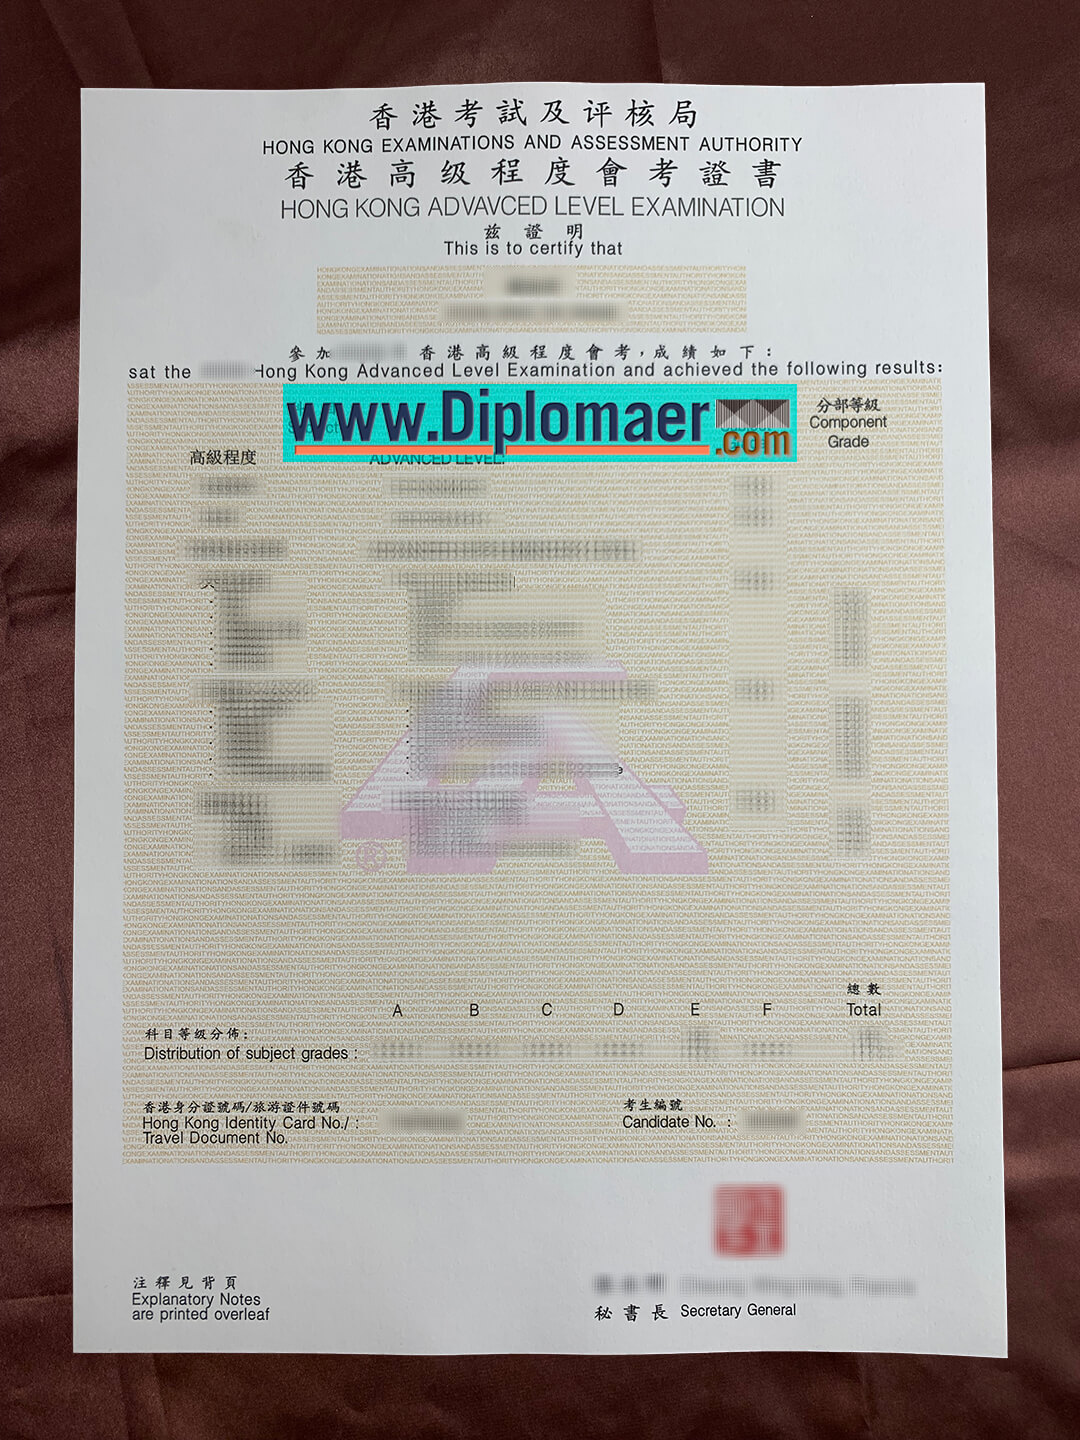 HK Advanced levle Fake diploma - Buy a fake HKALE certificate in Hong Kong.